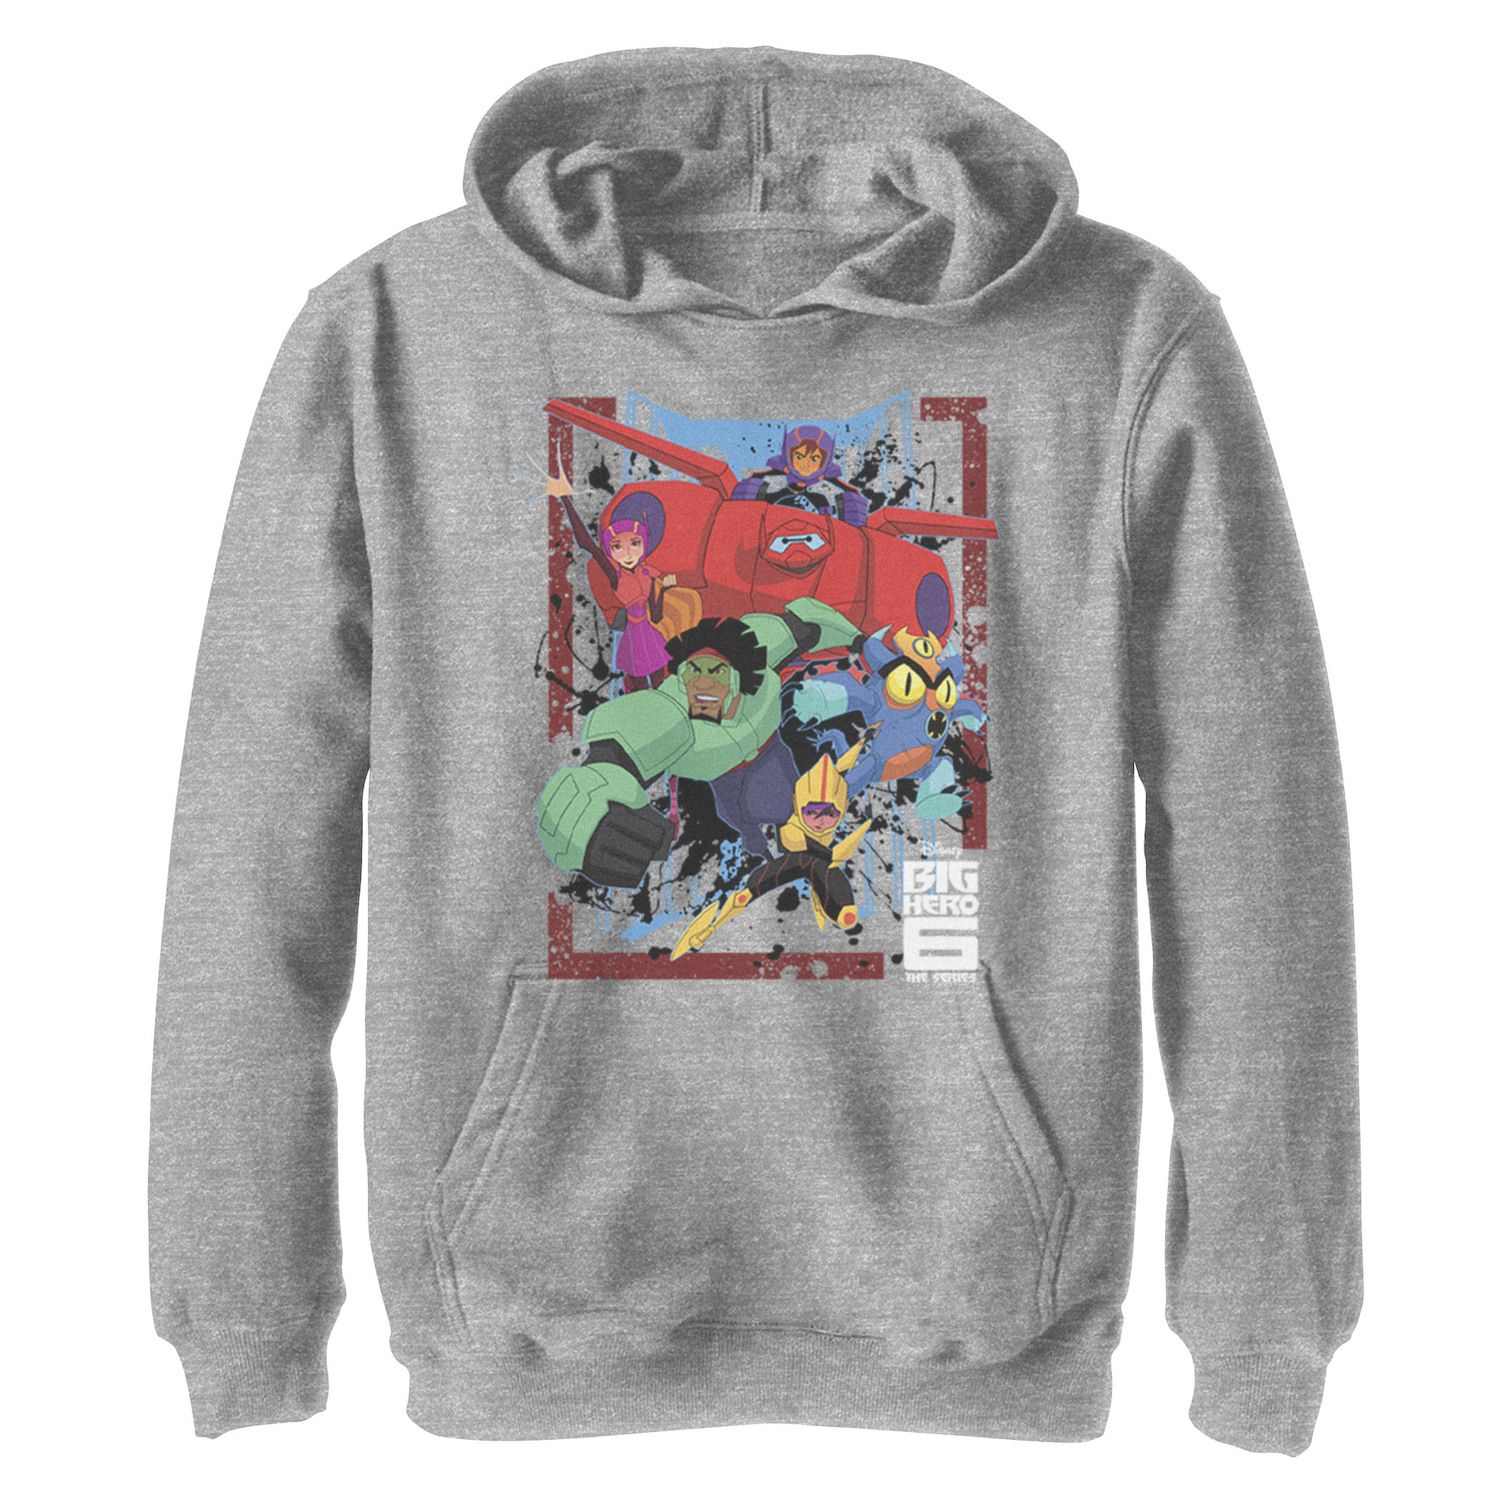 Image for Disney 's Big Hero 6 Boys 8-20 TV Group Paint Splat Graphic Fleece Hoodie at Kohl's.